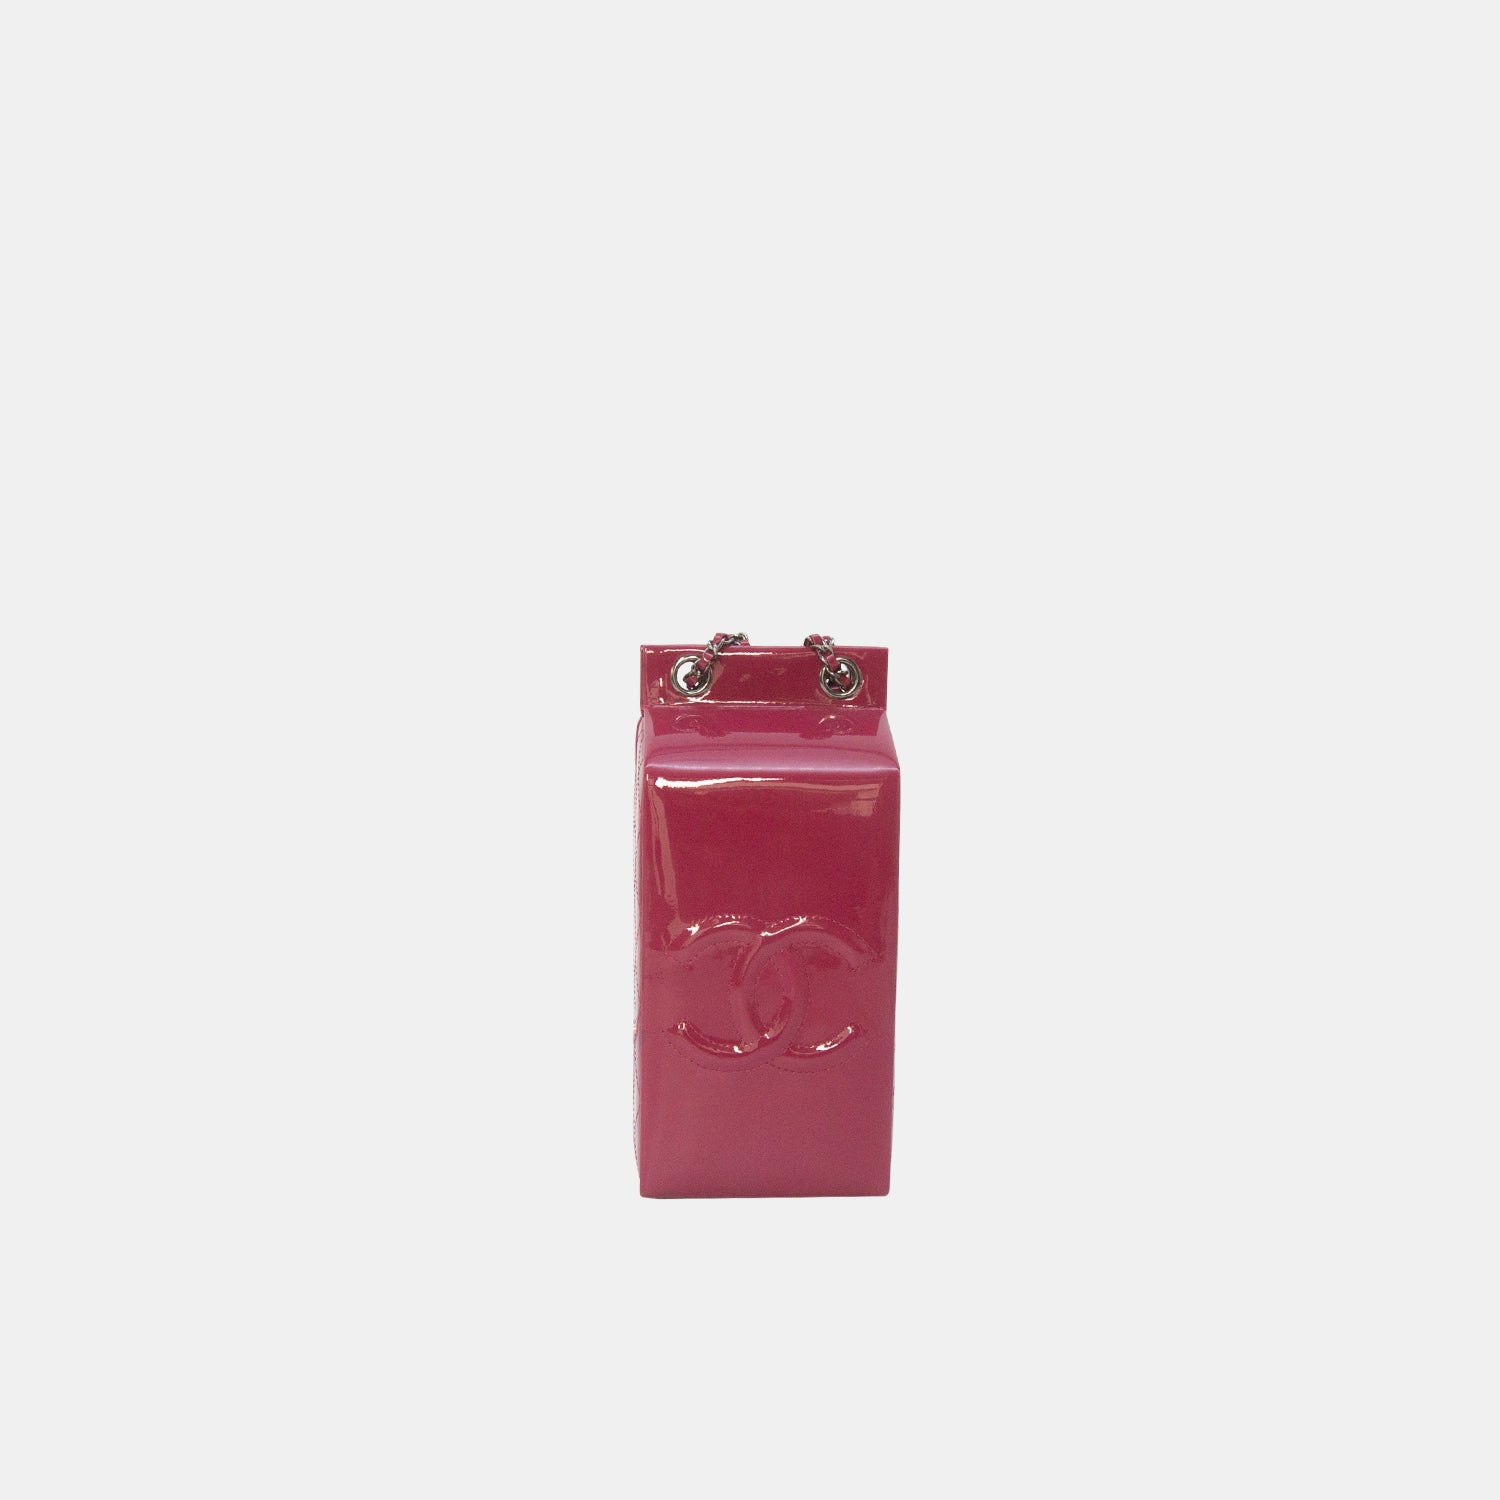 Chanel Bag *Limited Edition* Milk Carton Dark Pink Fuchsia Patent